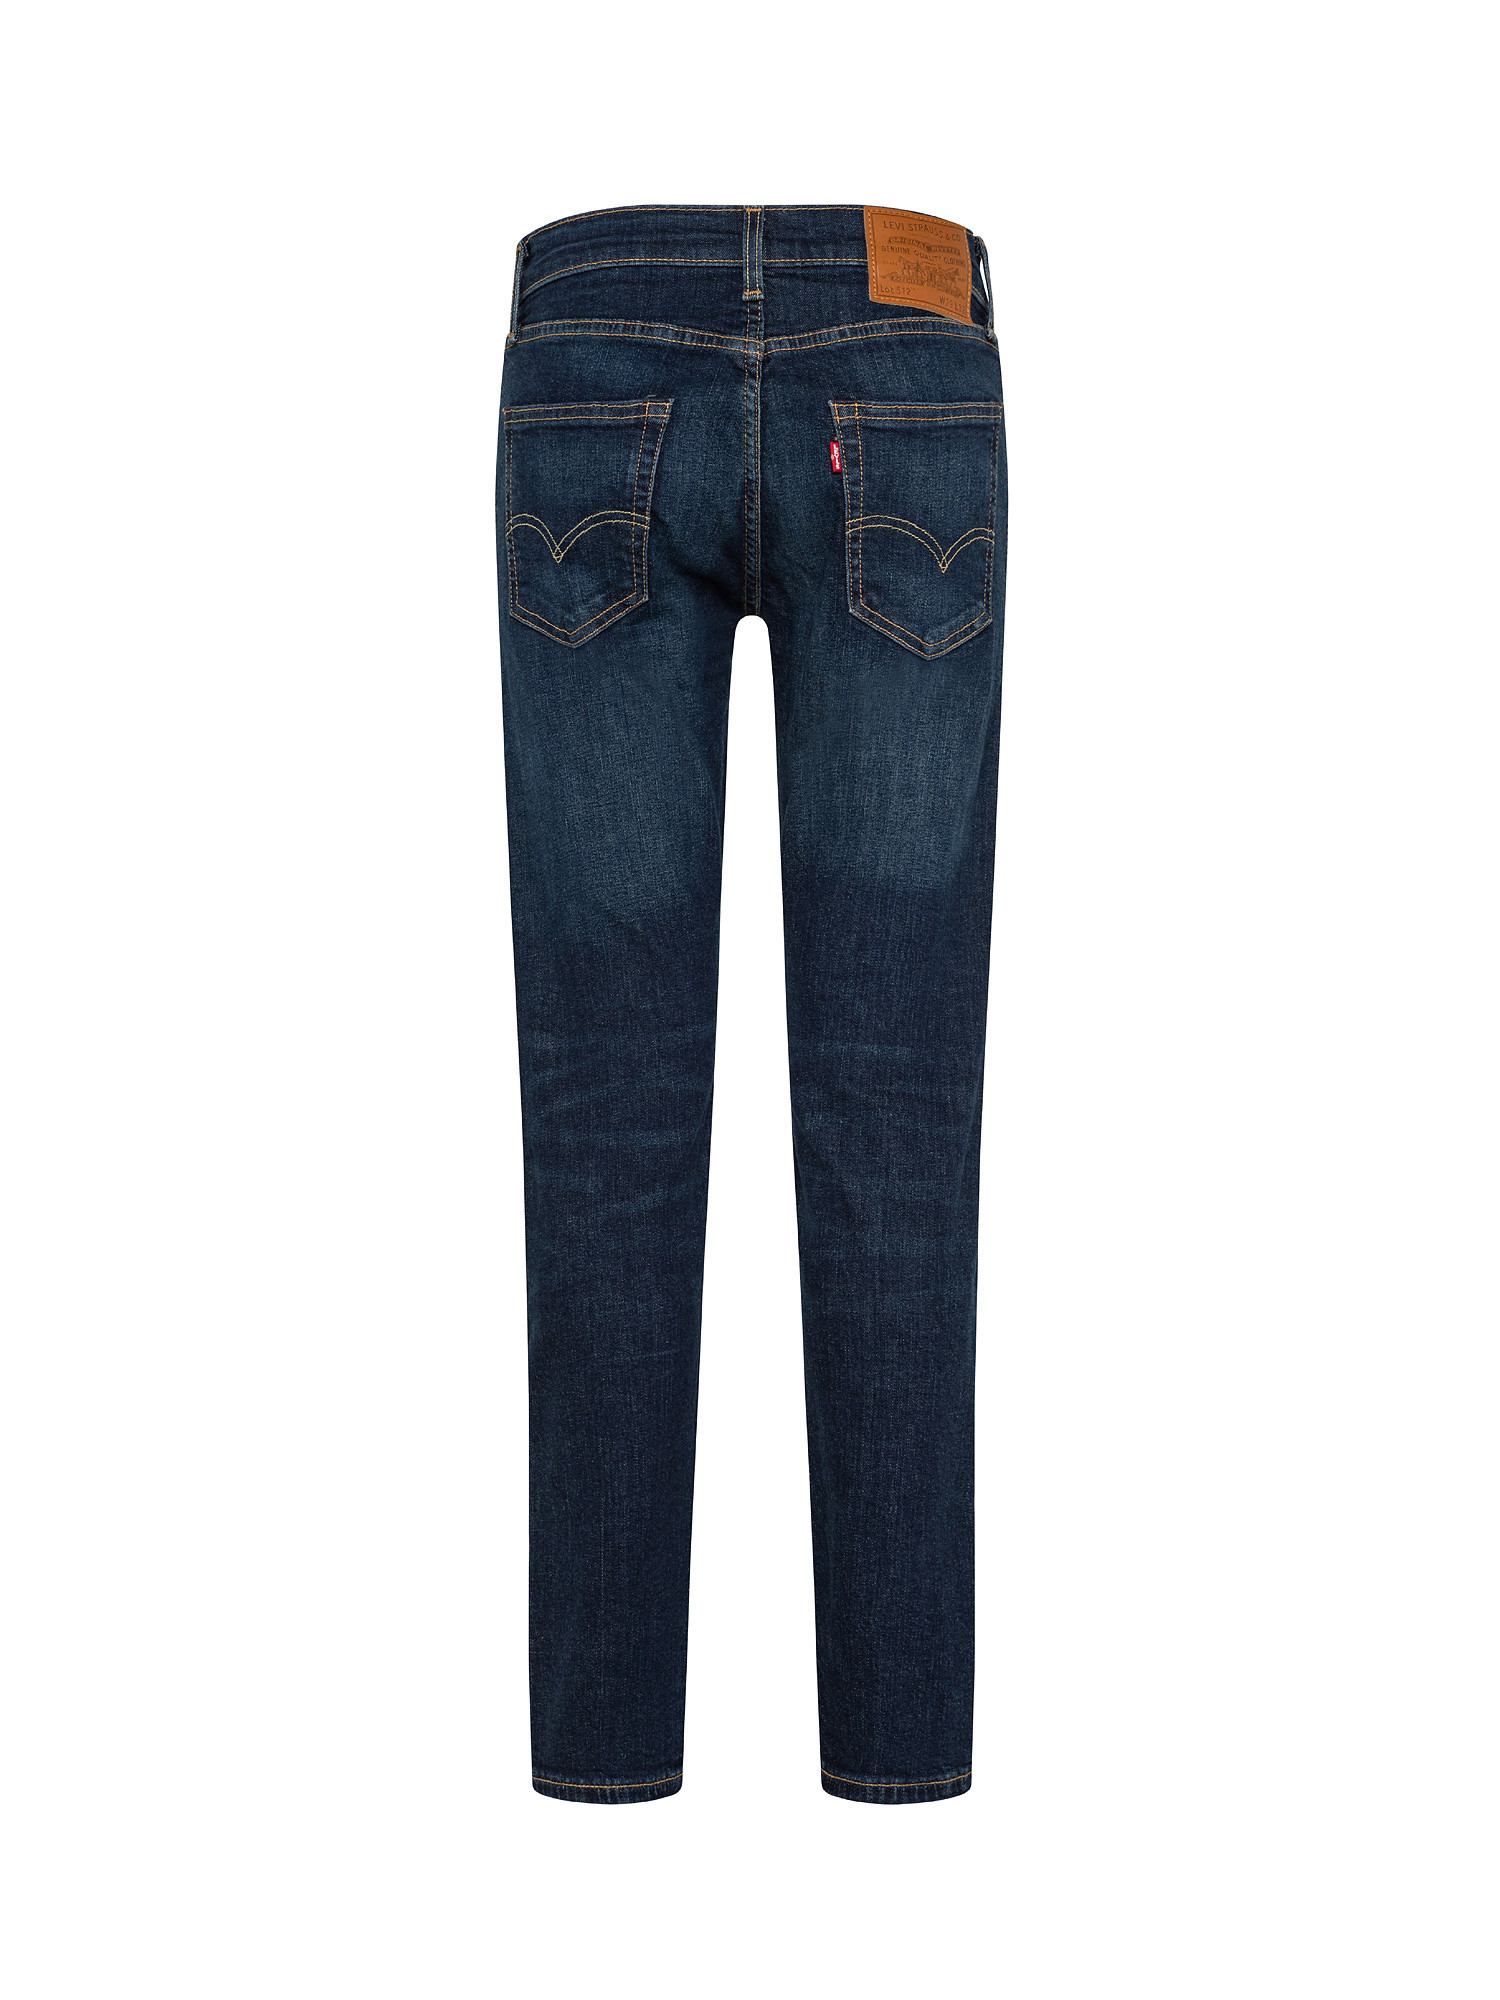 Levi's - Jeans 512 slim fit, Blu scuro, large image number 1